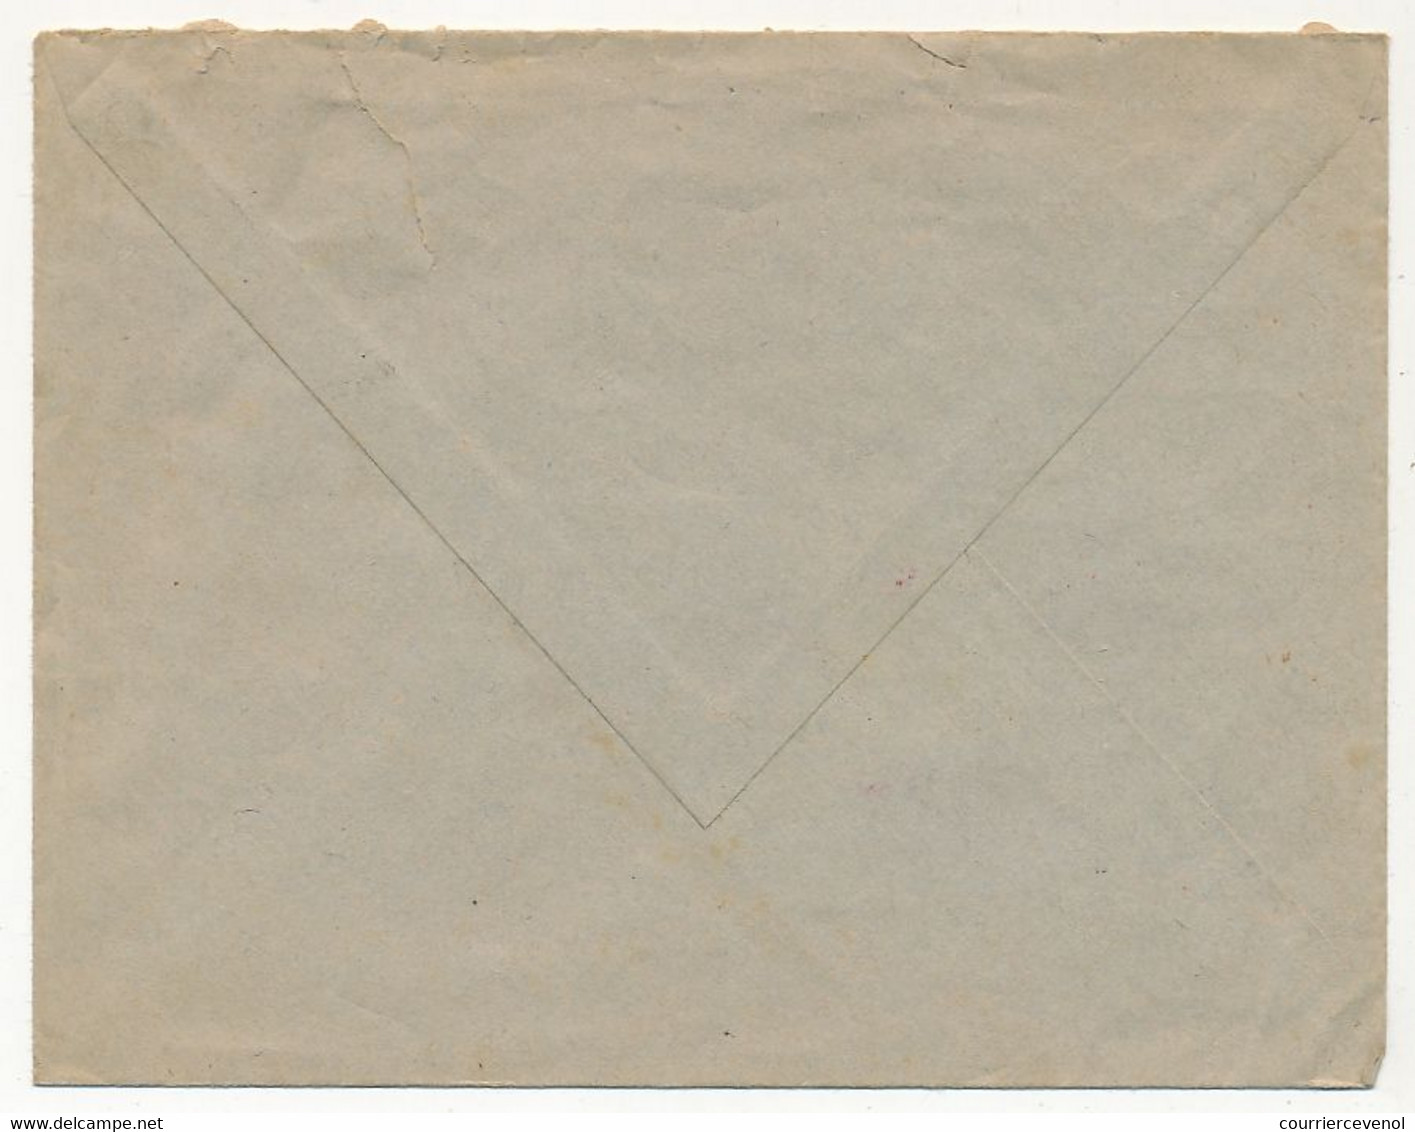 FRANCE - Env Affr 0,30 Blason De Paris, Obl Tiretée "BUE / CHER" 6/5/1966 - Manual Postmarks